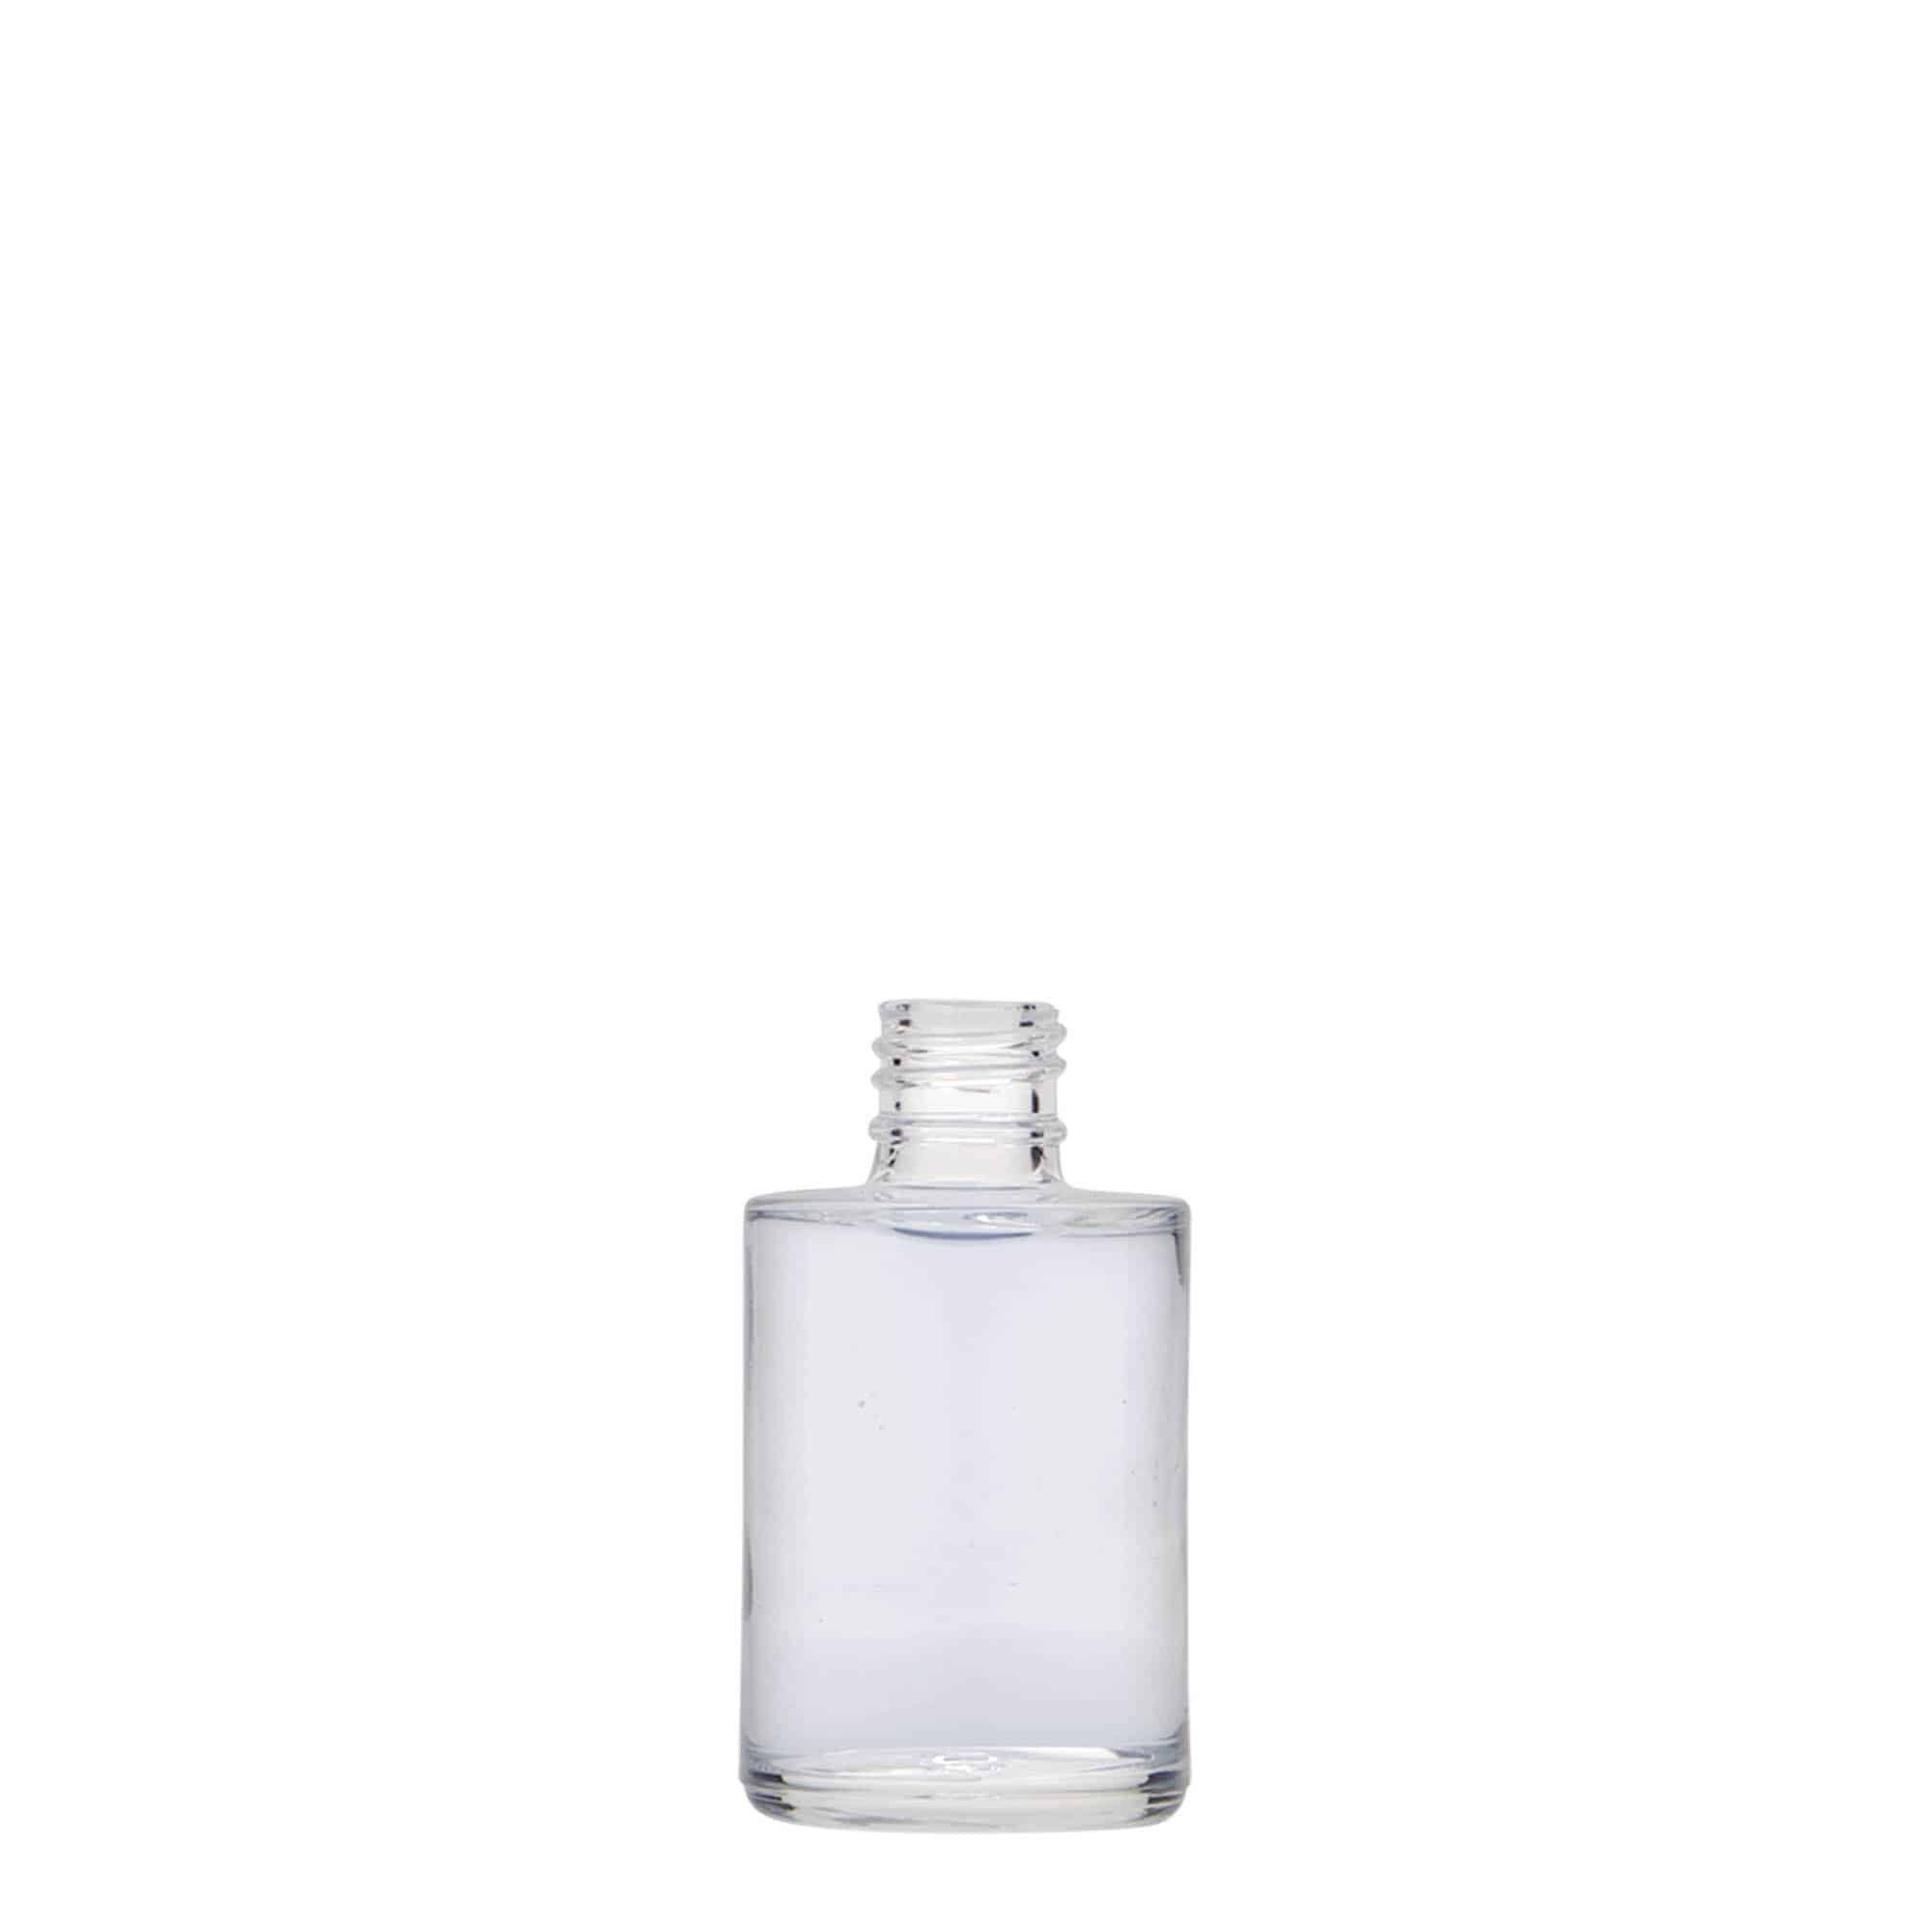 16 ml nail polish bottle 'London' with brush, glass